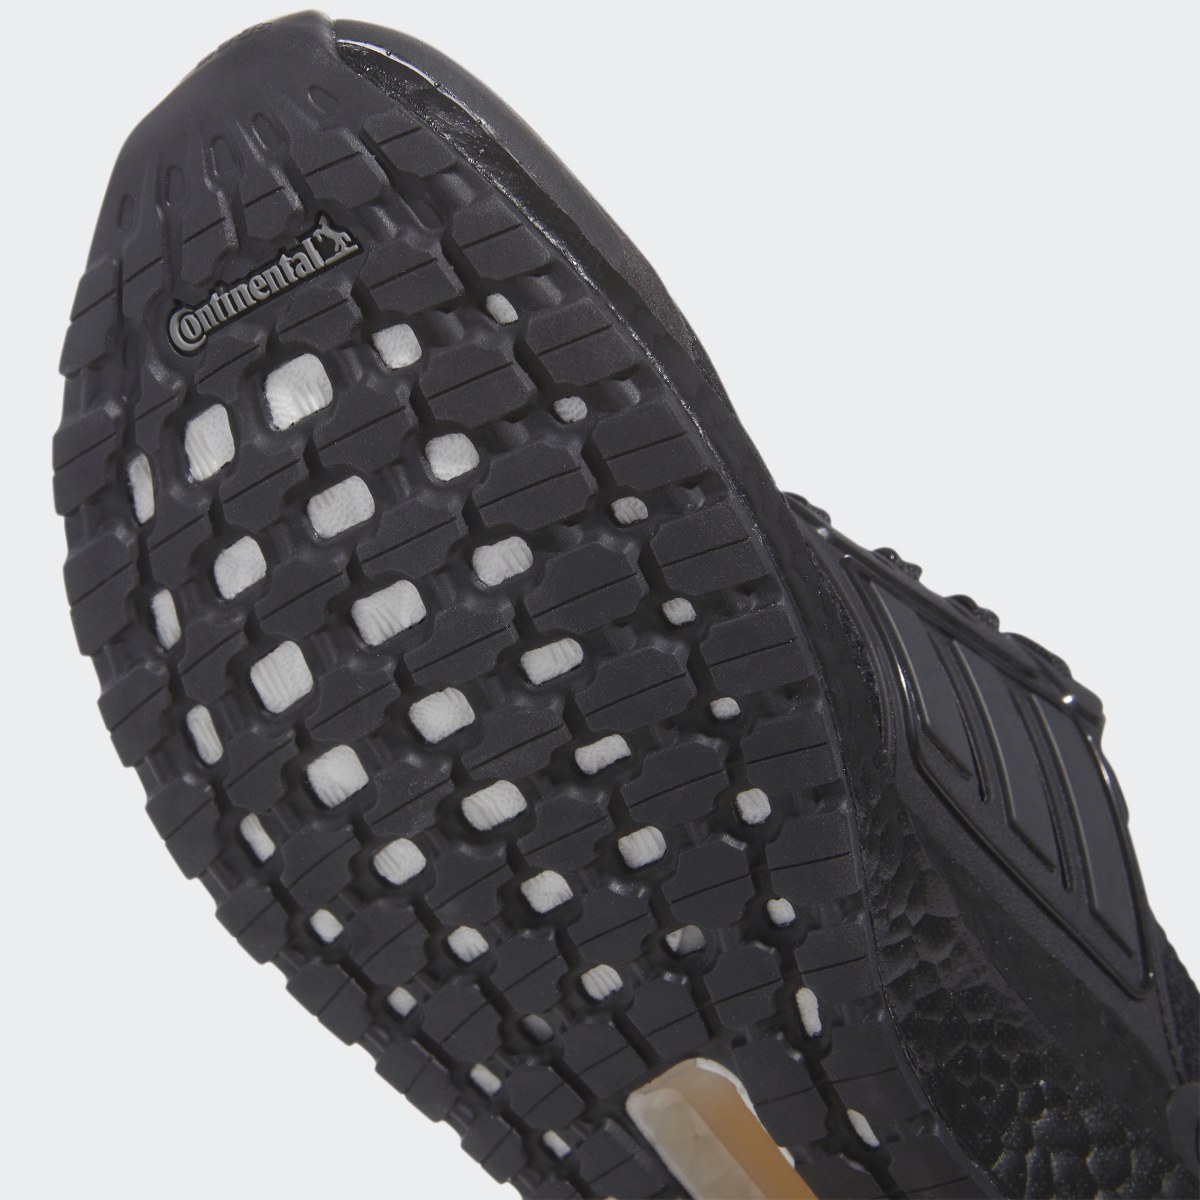 Adidas Ultraboost 19.5 DNA Running Sportswear Lifestyle Shoes. 10